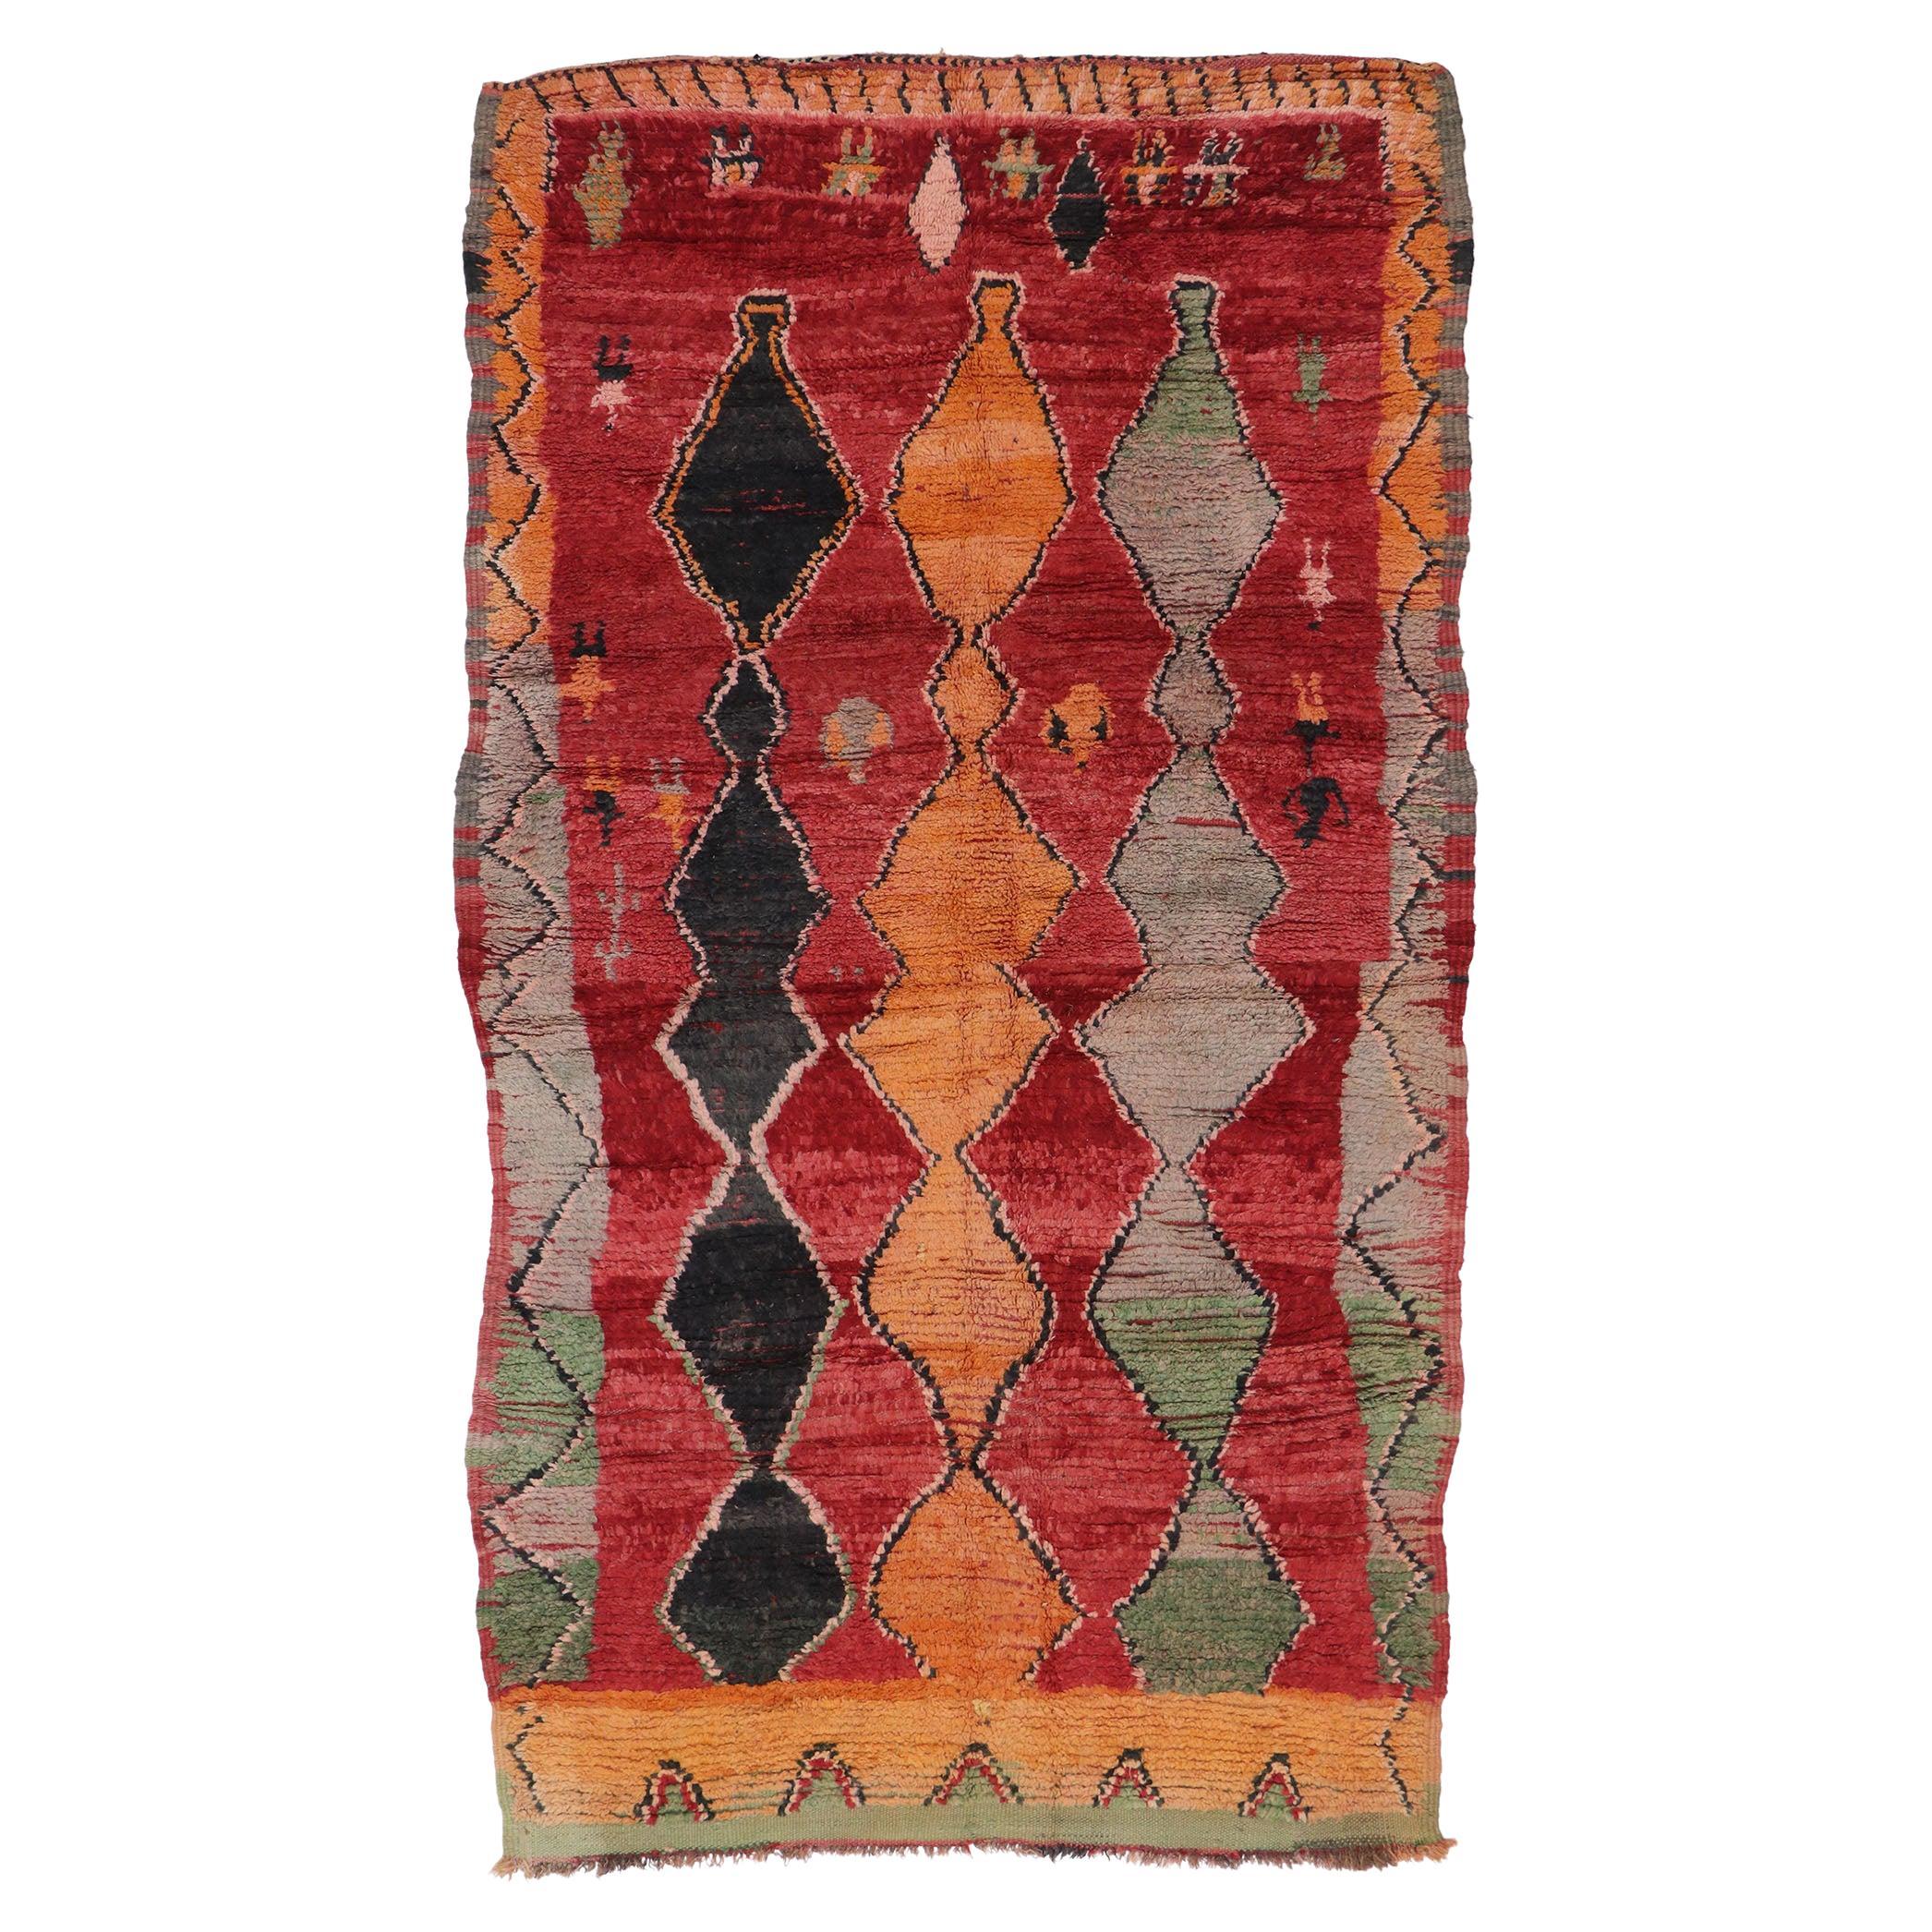 Vintage Berber Moroccan Rug, Cozy Nomad Meets Maximalist Style